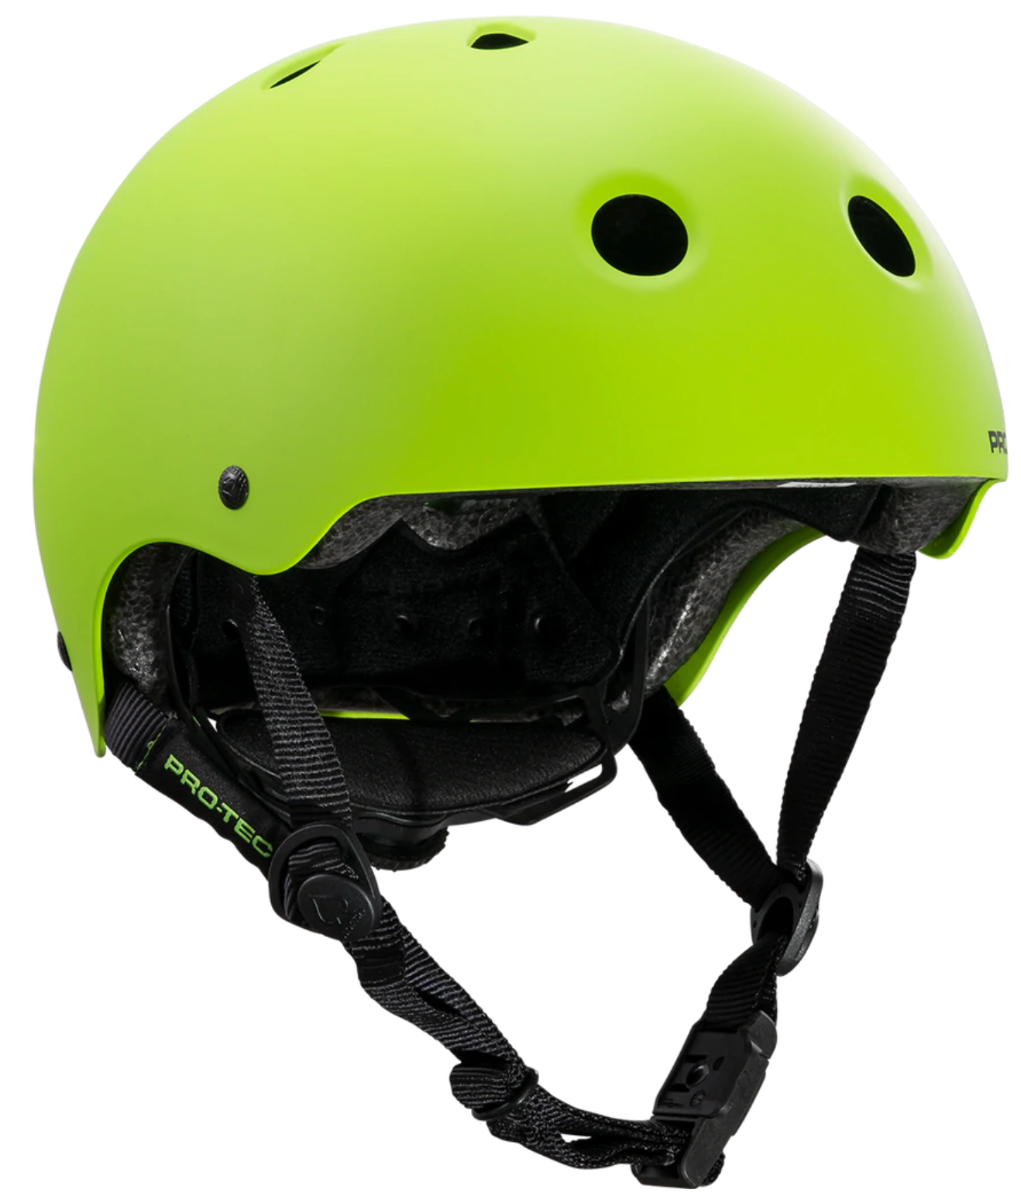 Protec Youth Certified Helmet